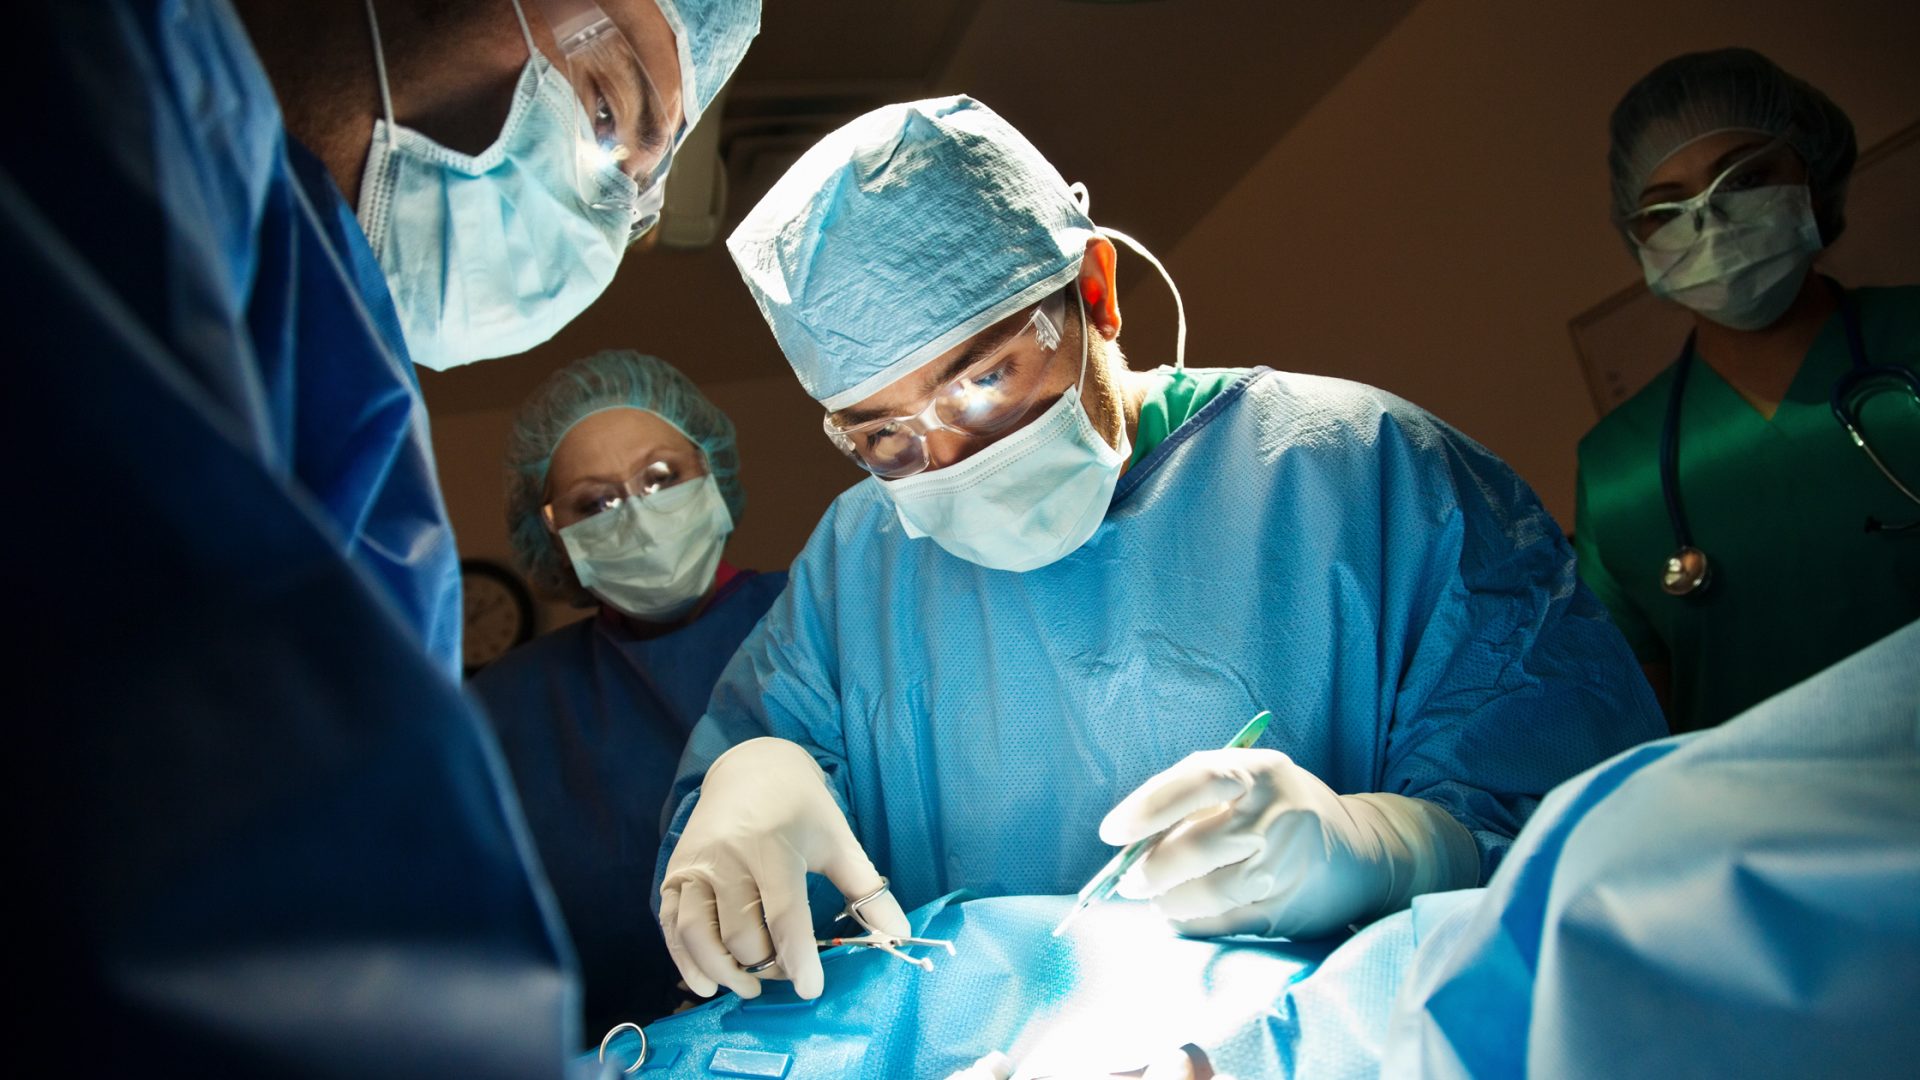 Surgeons Performing Cesarean Procedure